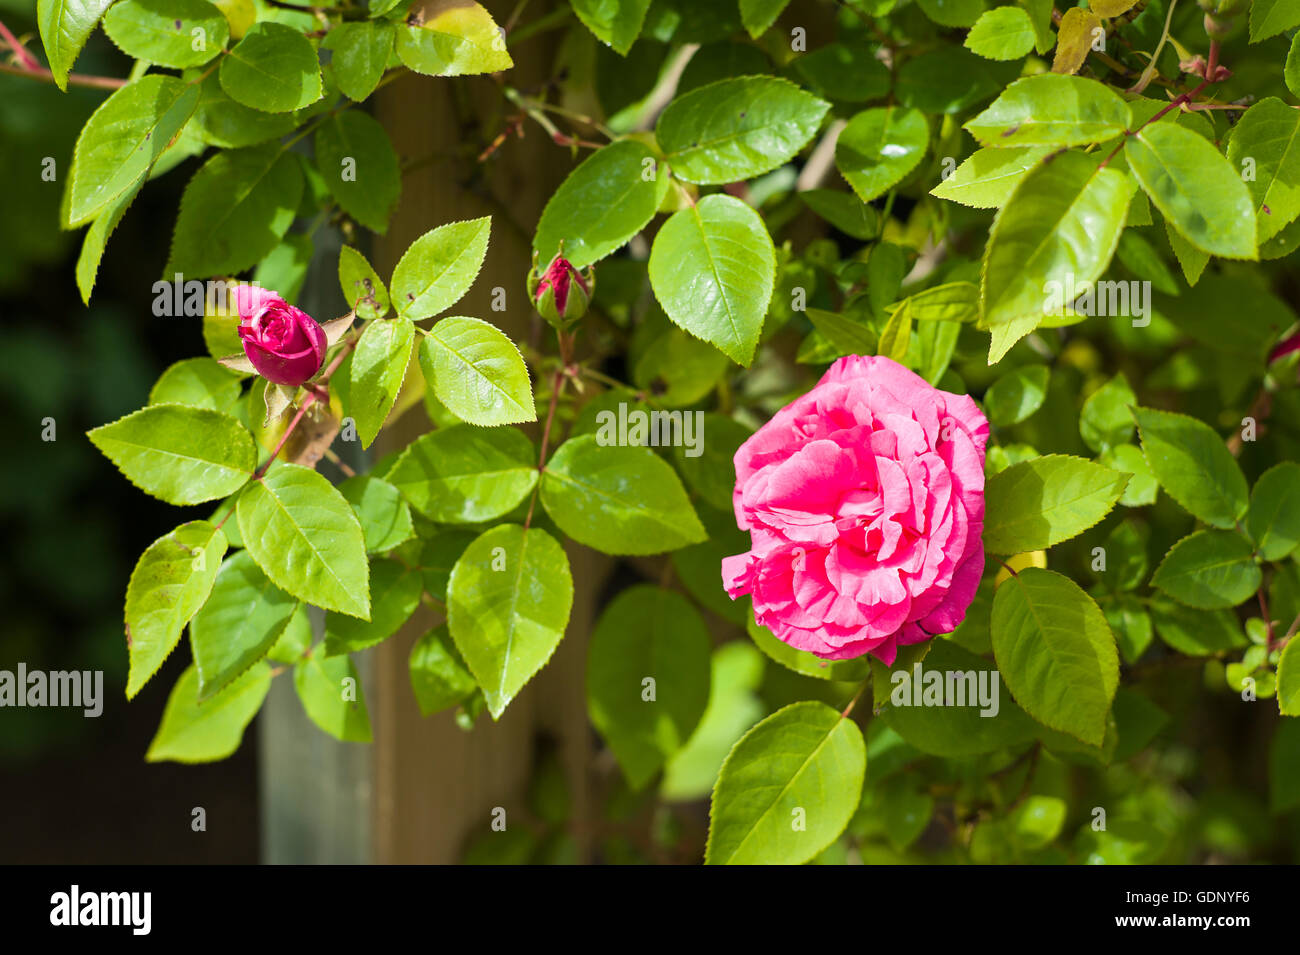 Zephirine Drouhin rose in flower Stock Photo